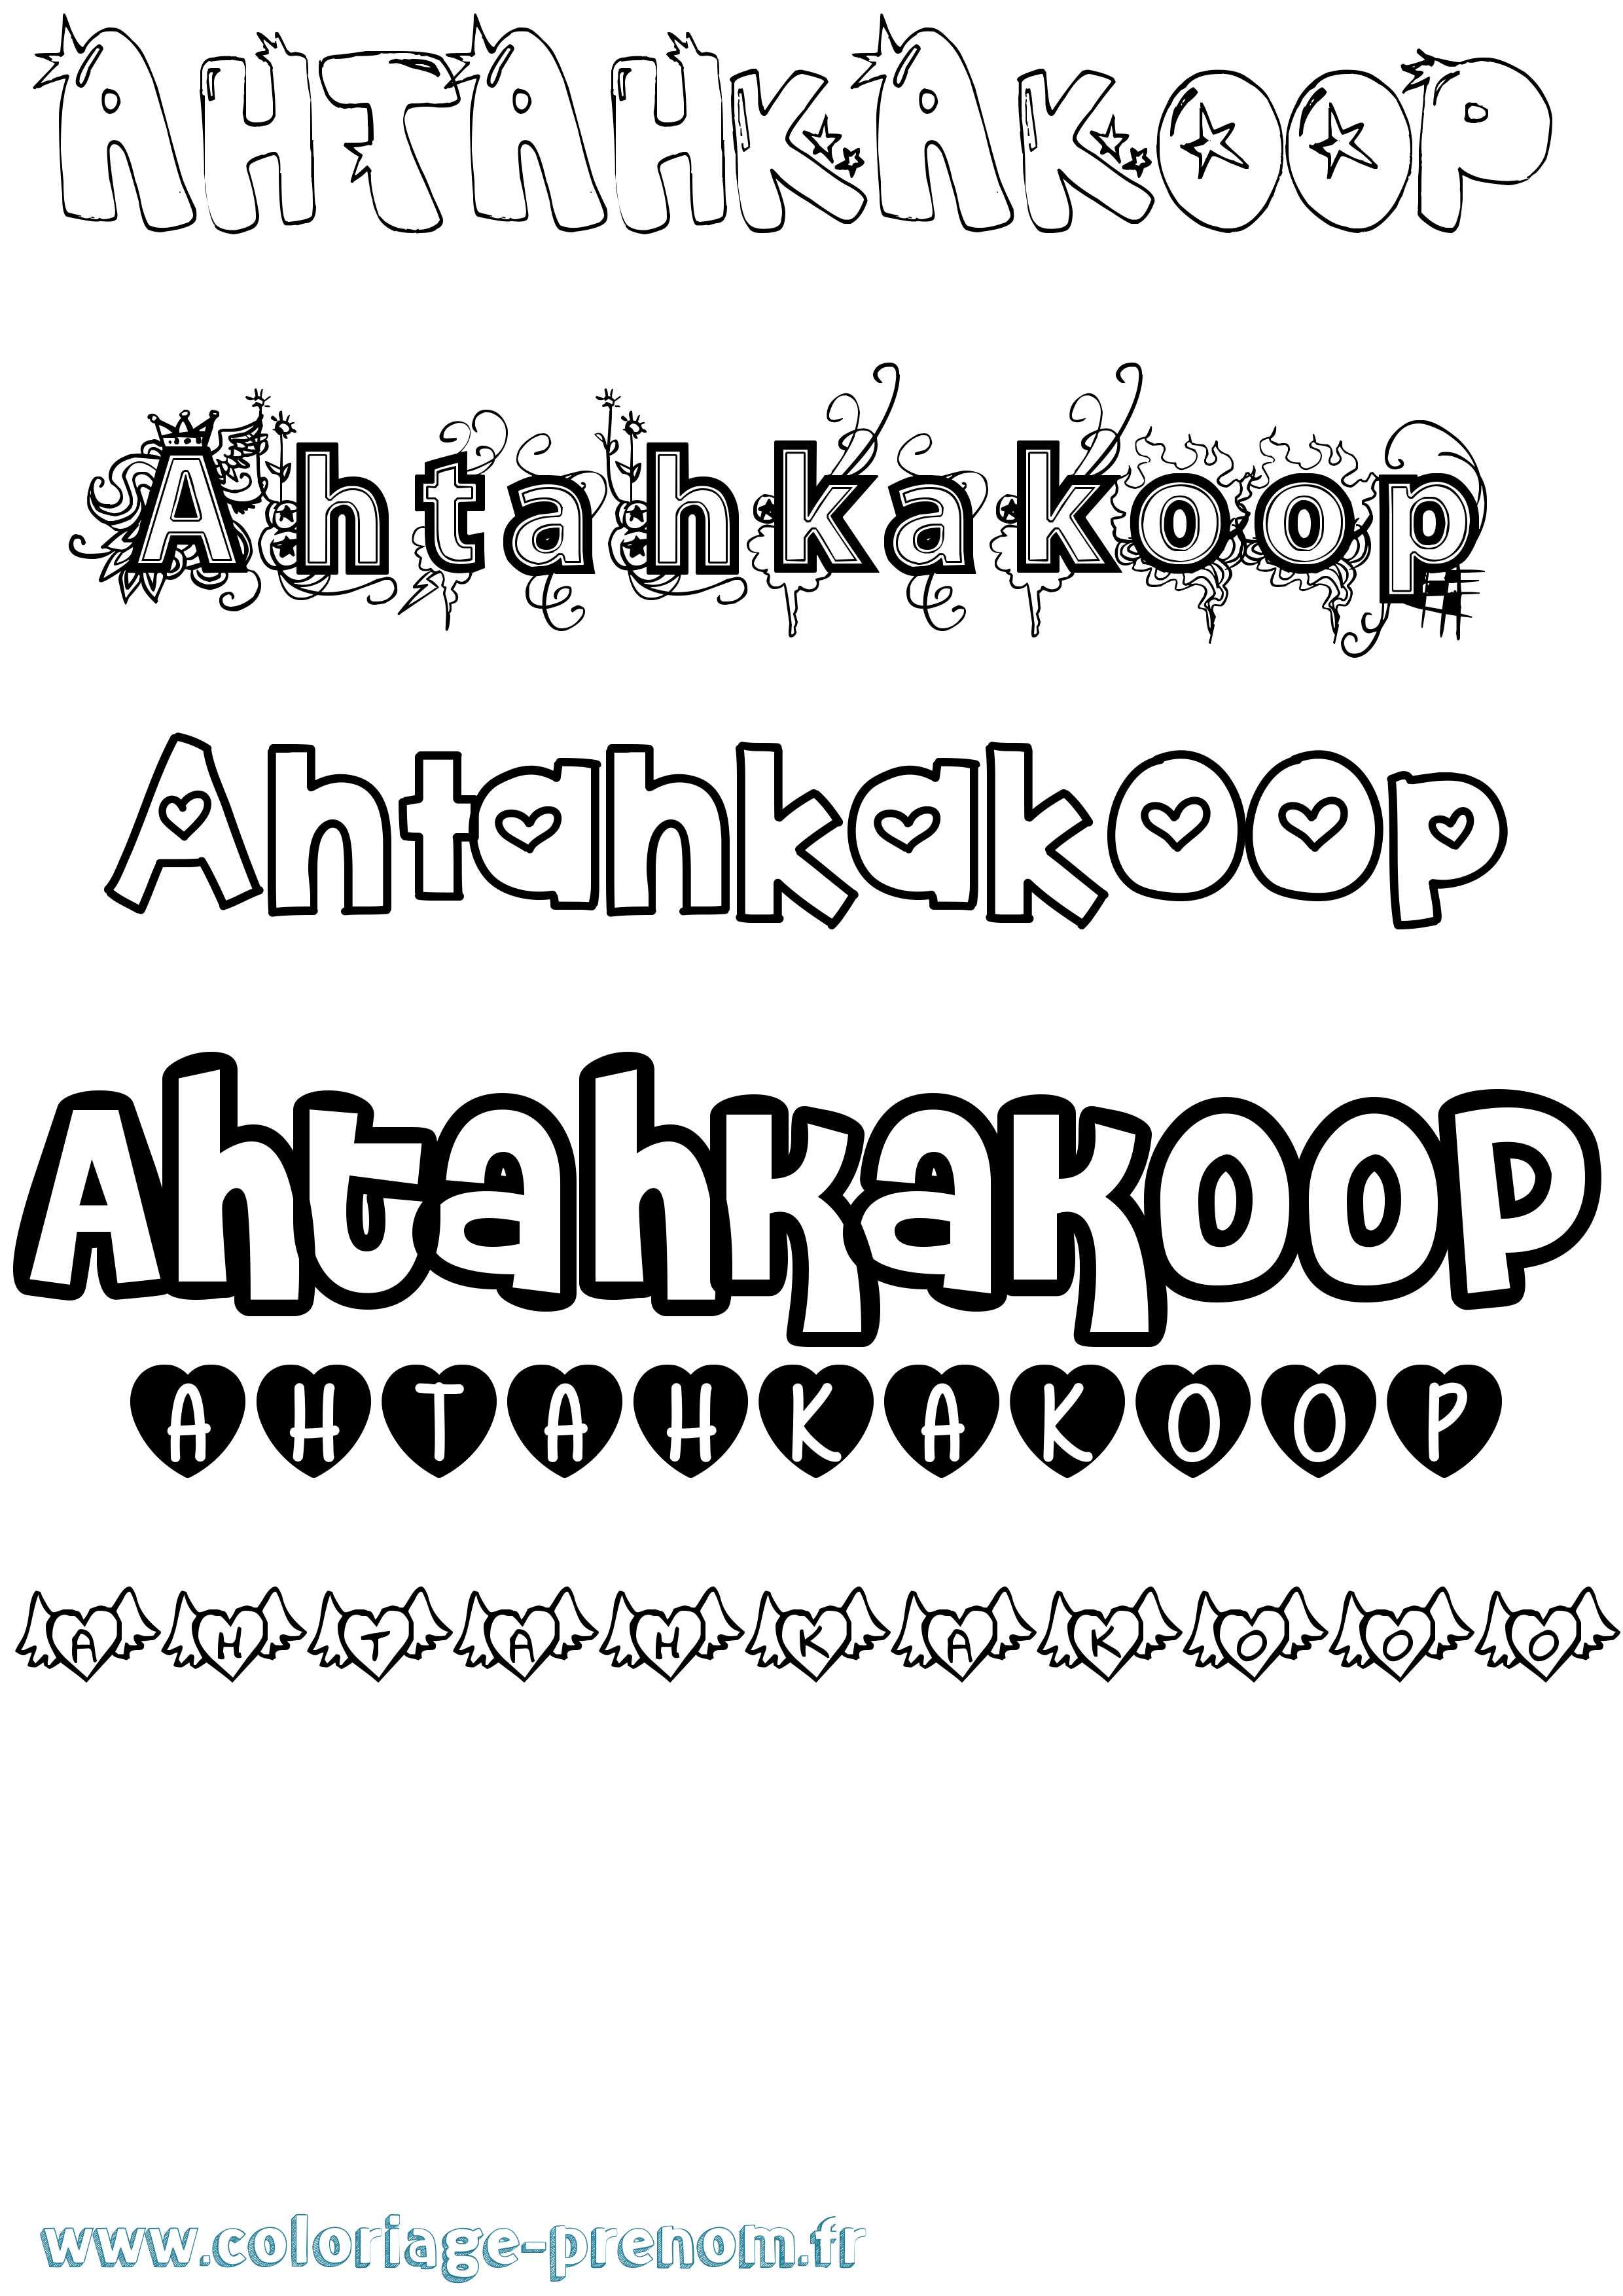 Coloriage prénom Ahtahkakoop Girly